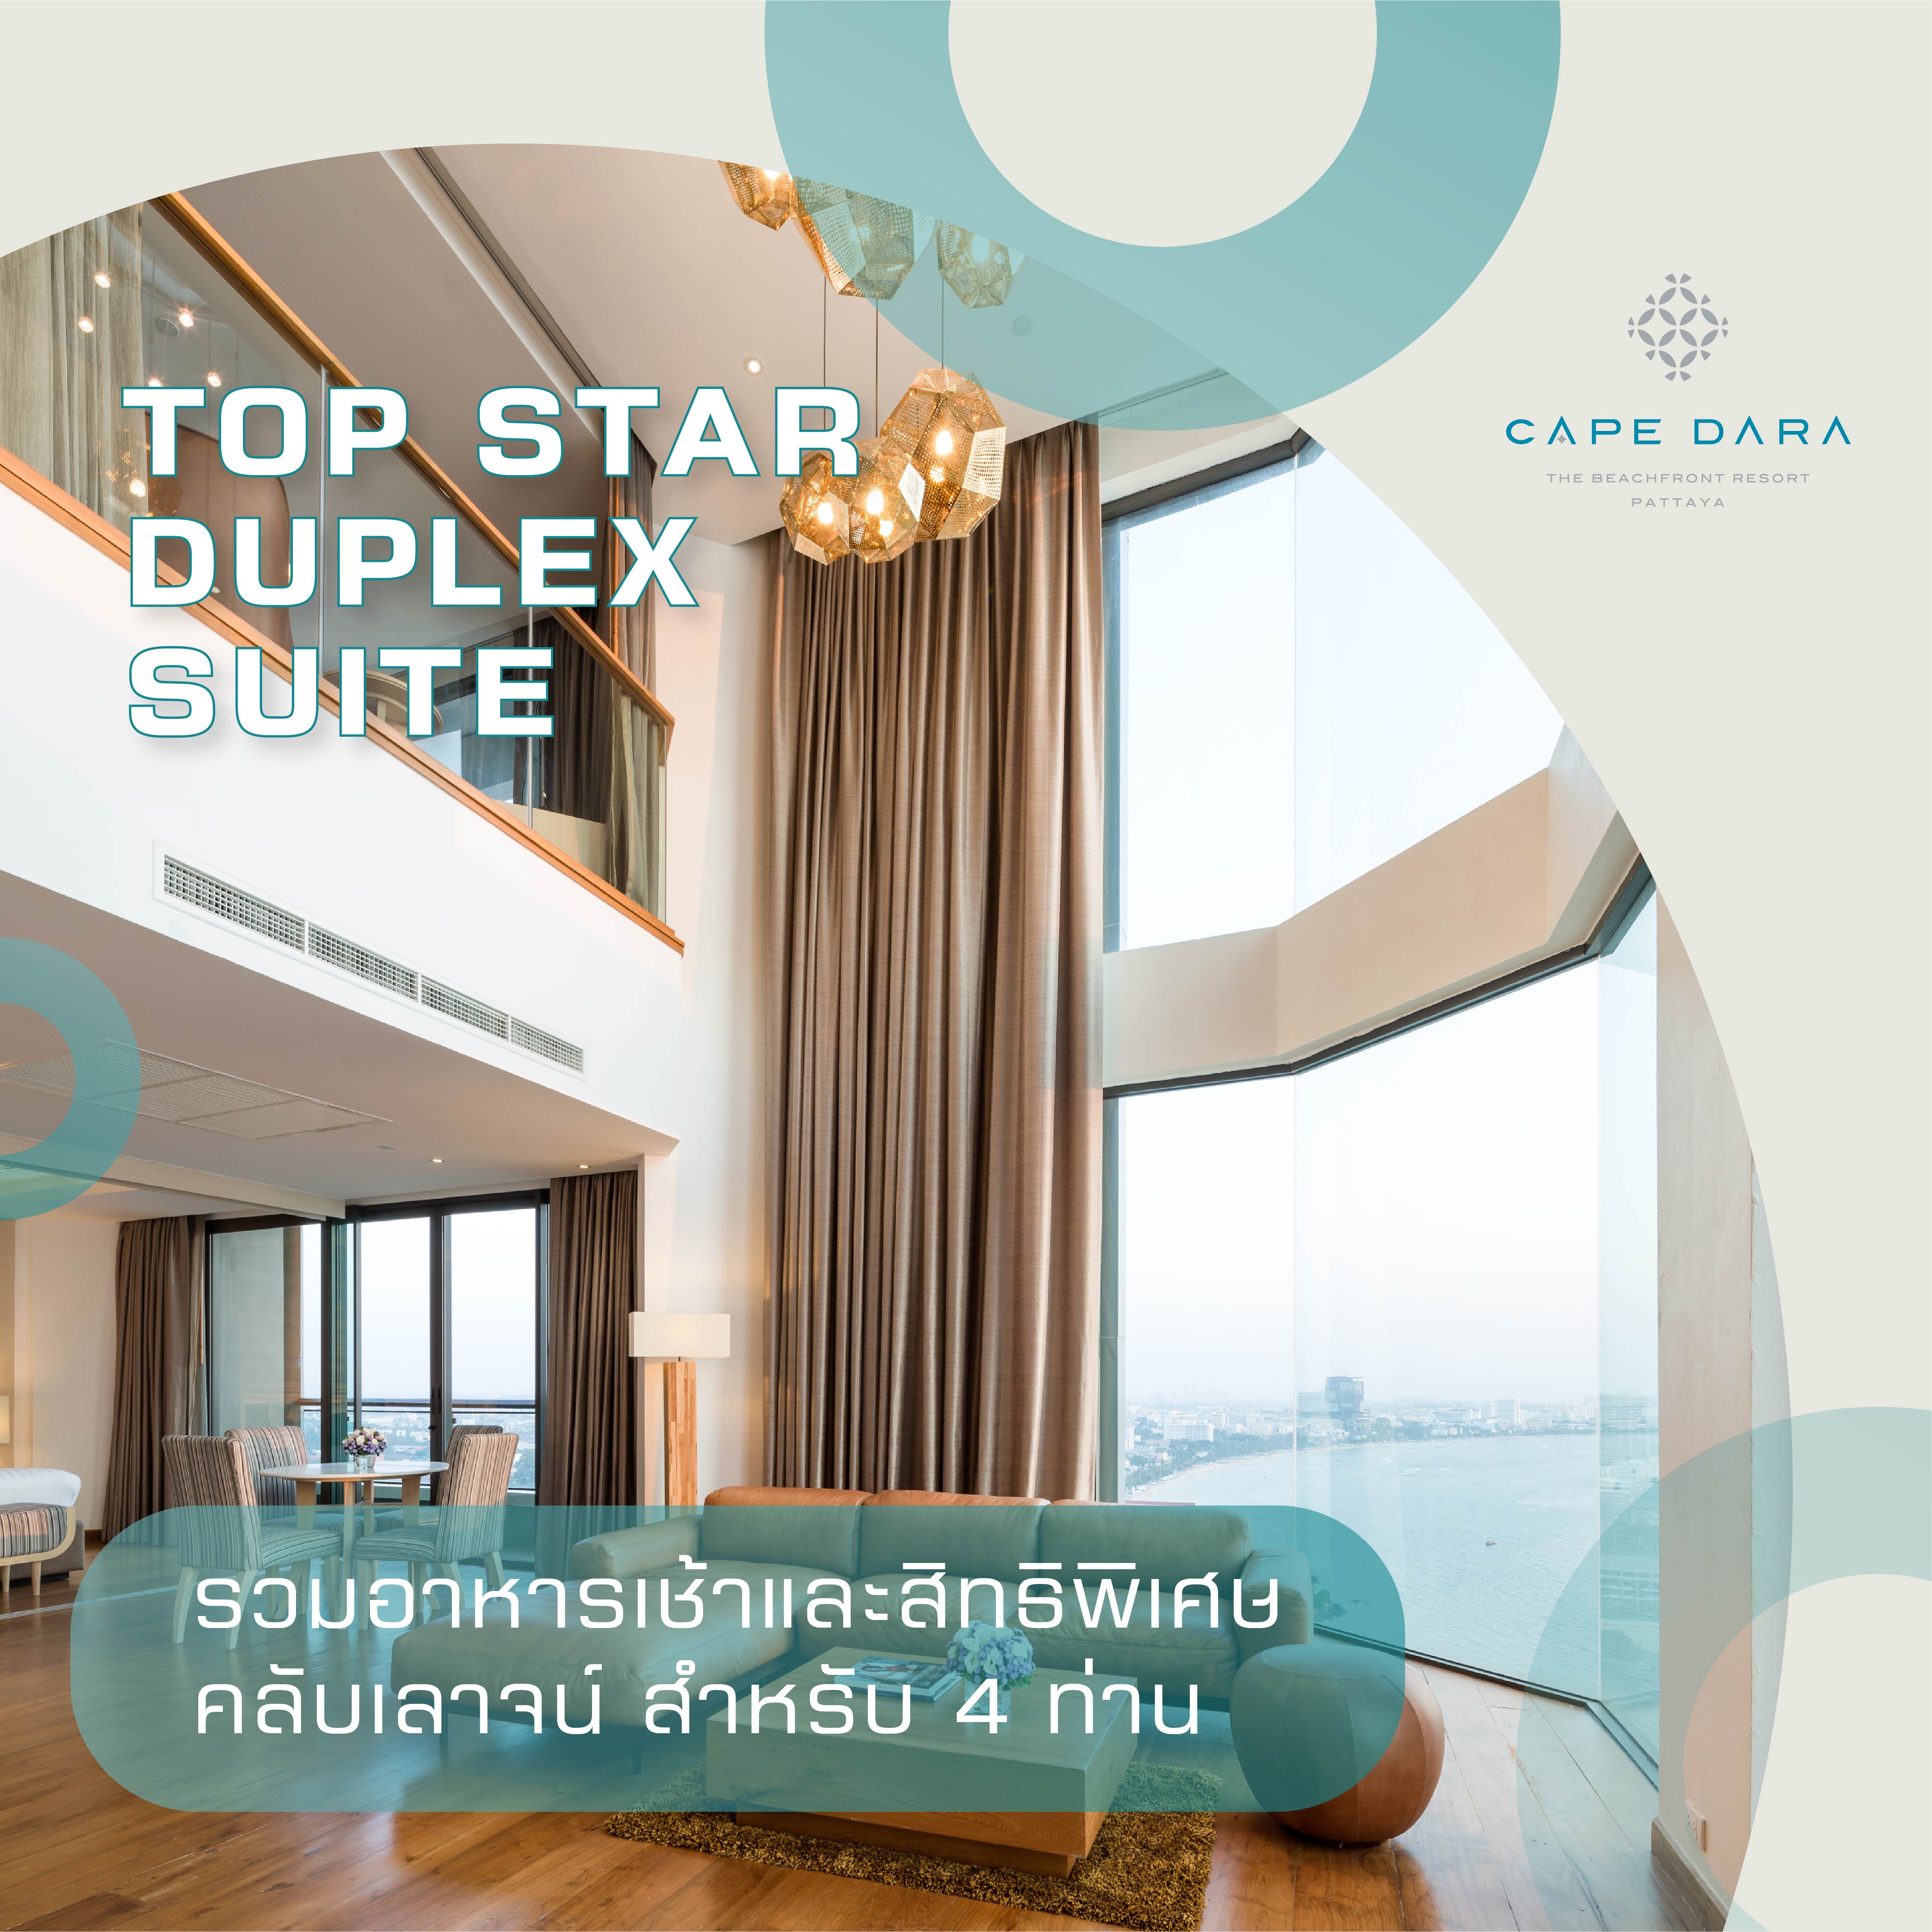 E-Voucher Cape Dara Pattaya ห้อง TOP STAR DUPLEX SUITE